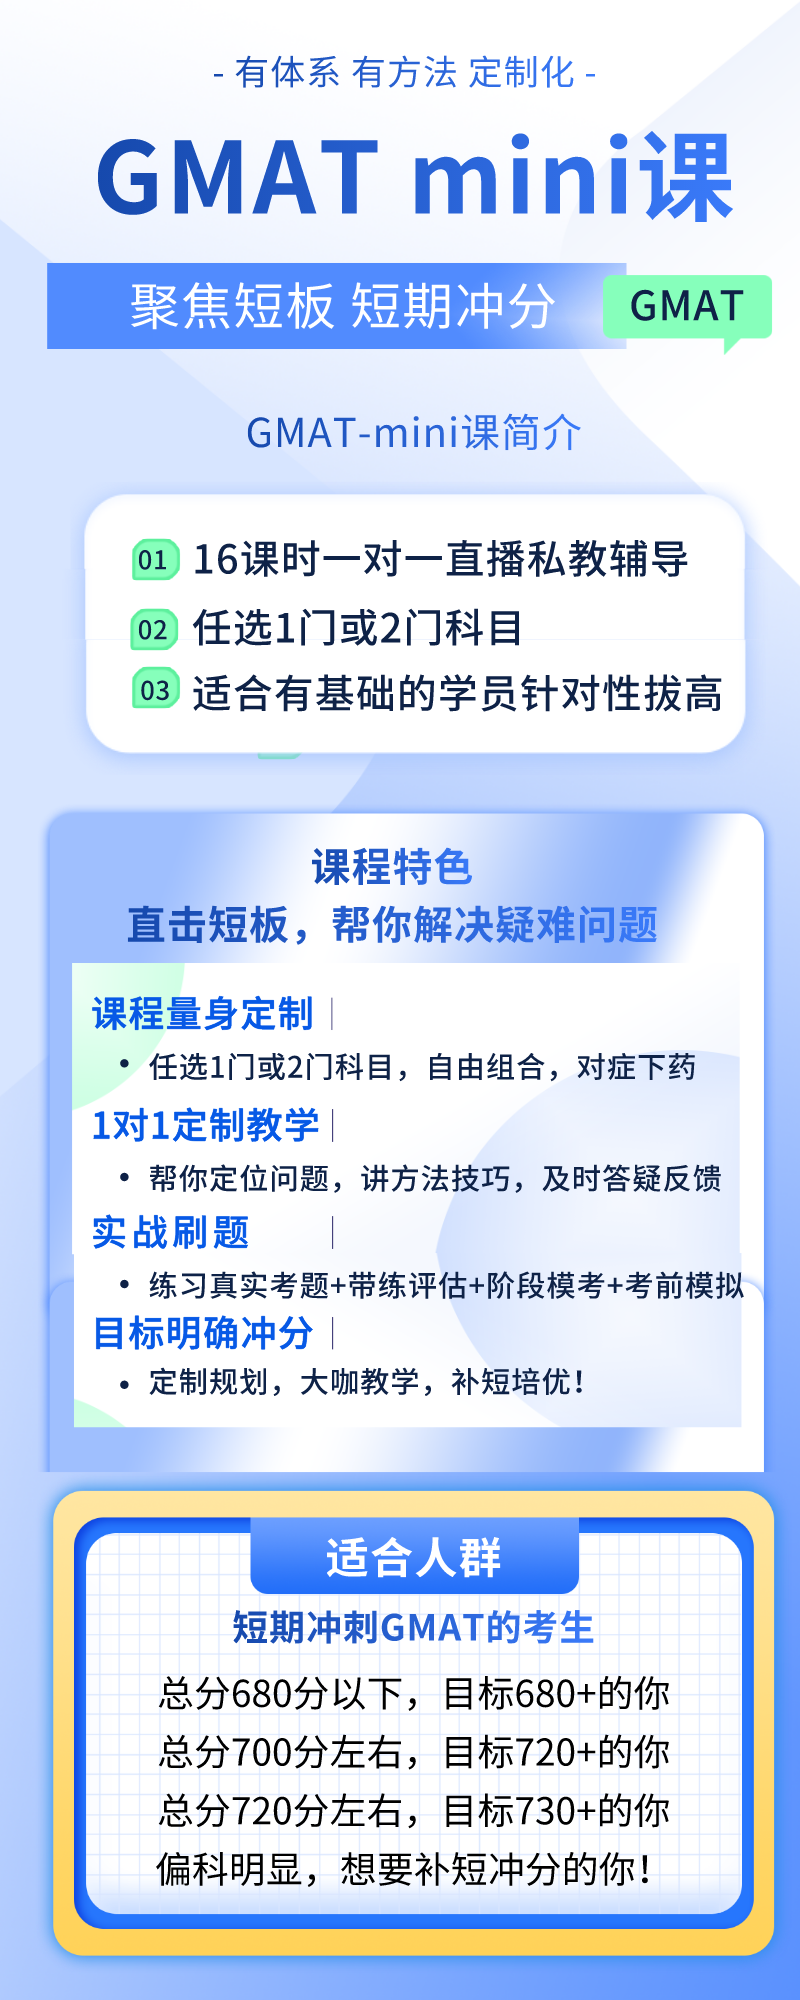 https://simg01.gaodunwangxiao.com/uploadfiles/product-center/202210/25/ddd93_20221025135844.png